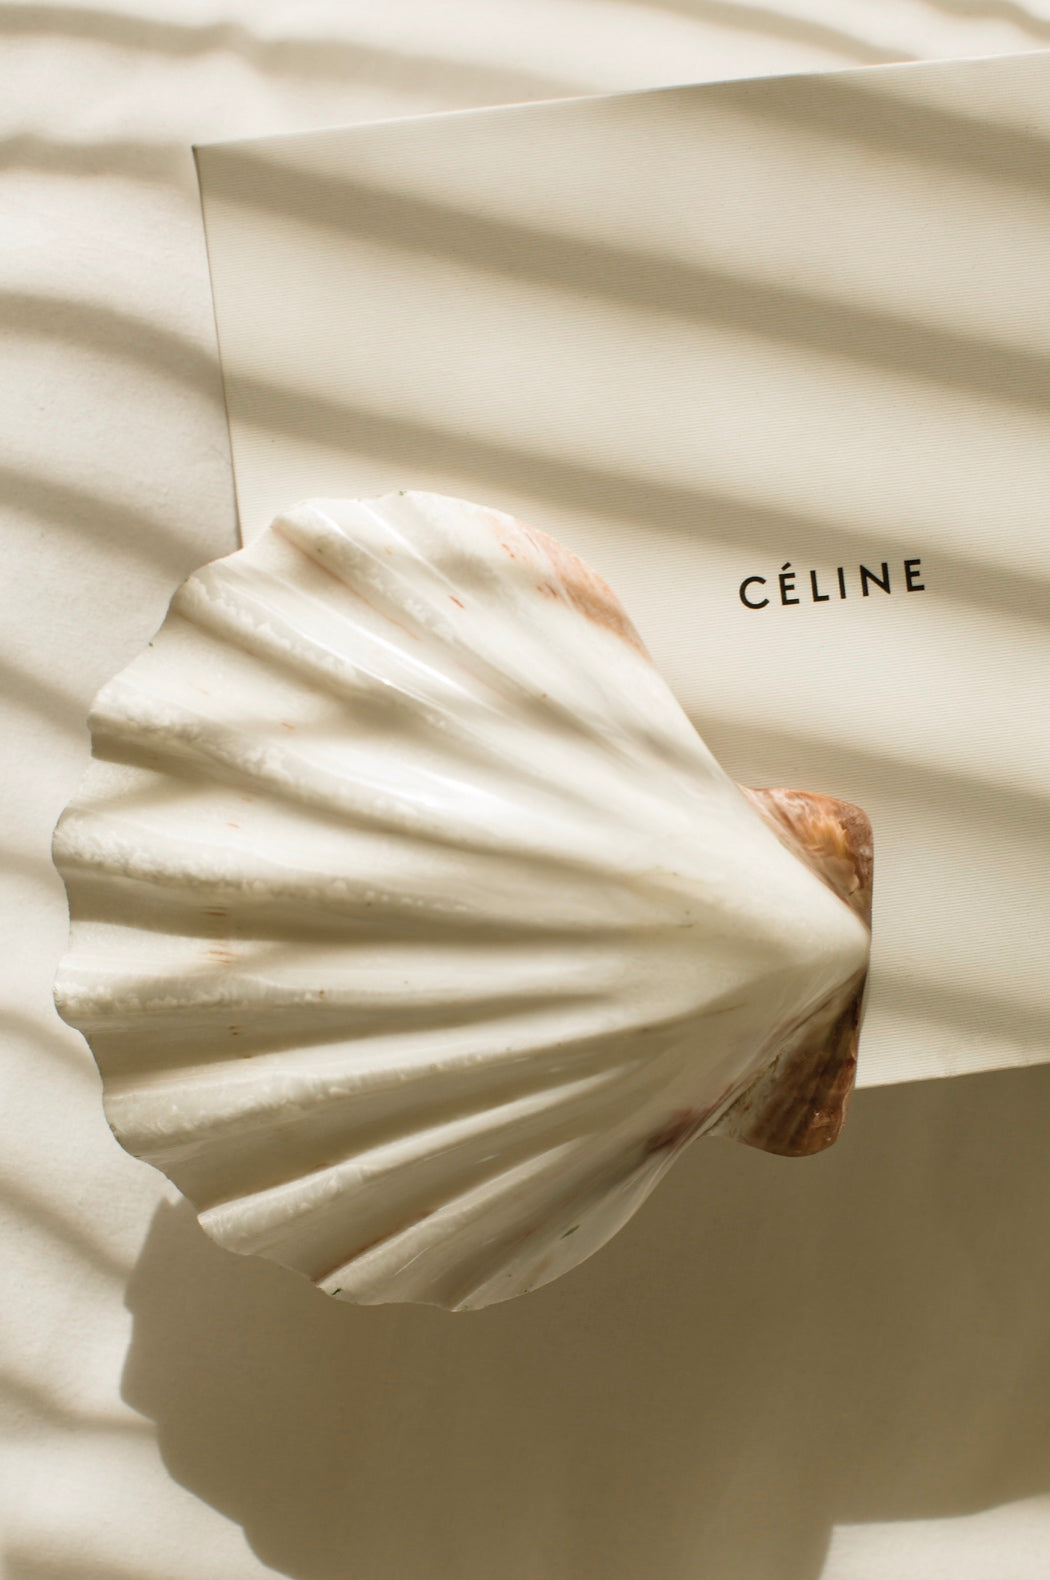 Celine Shadows